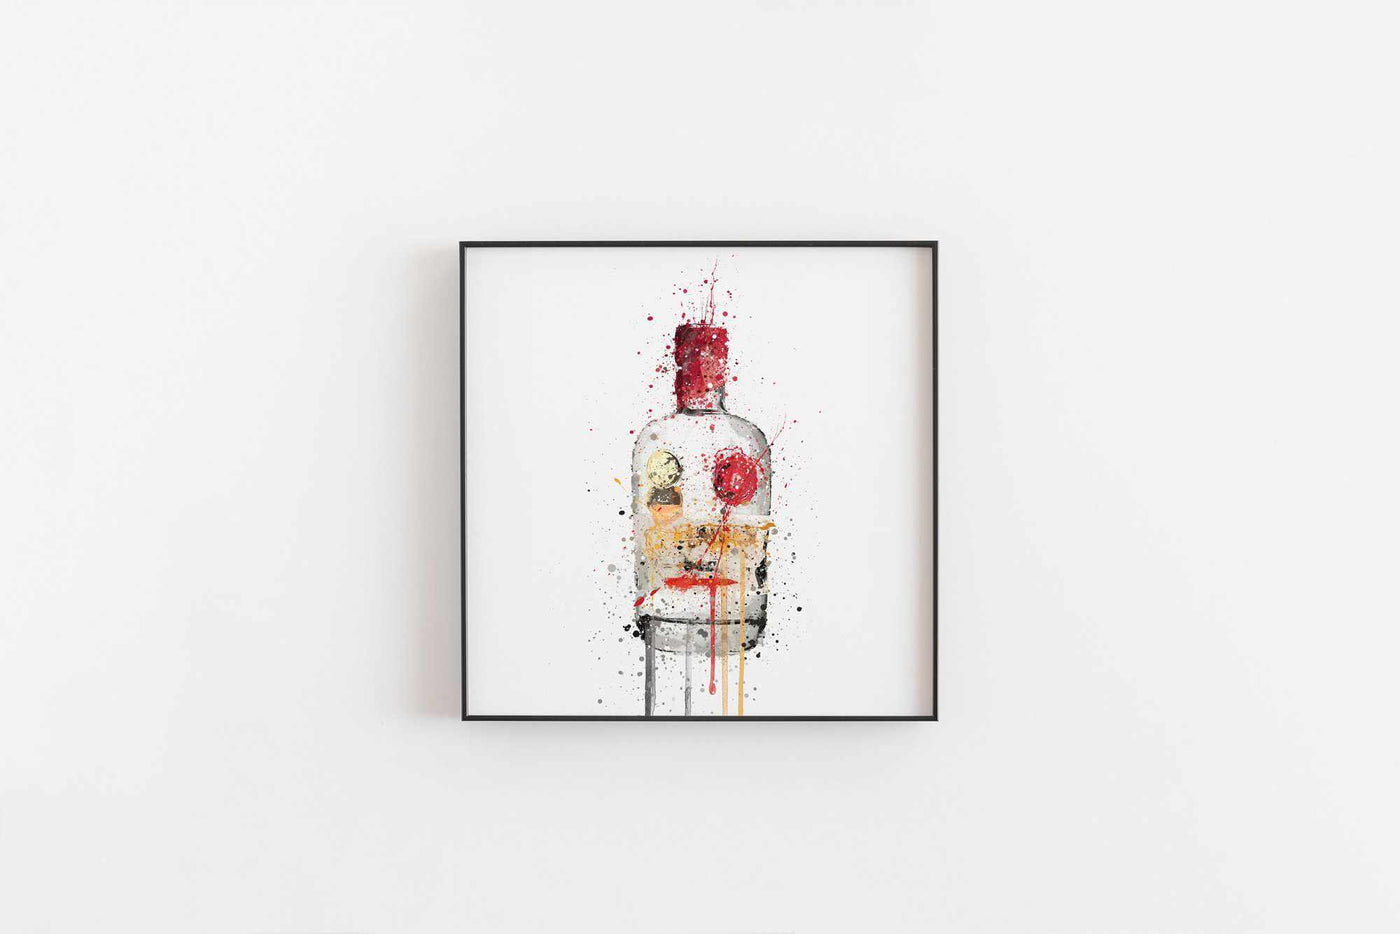 Gin Bottle Wall Art Print 'Crimson'-We Love Prints